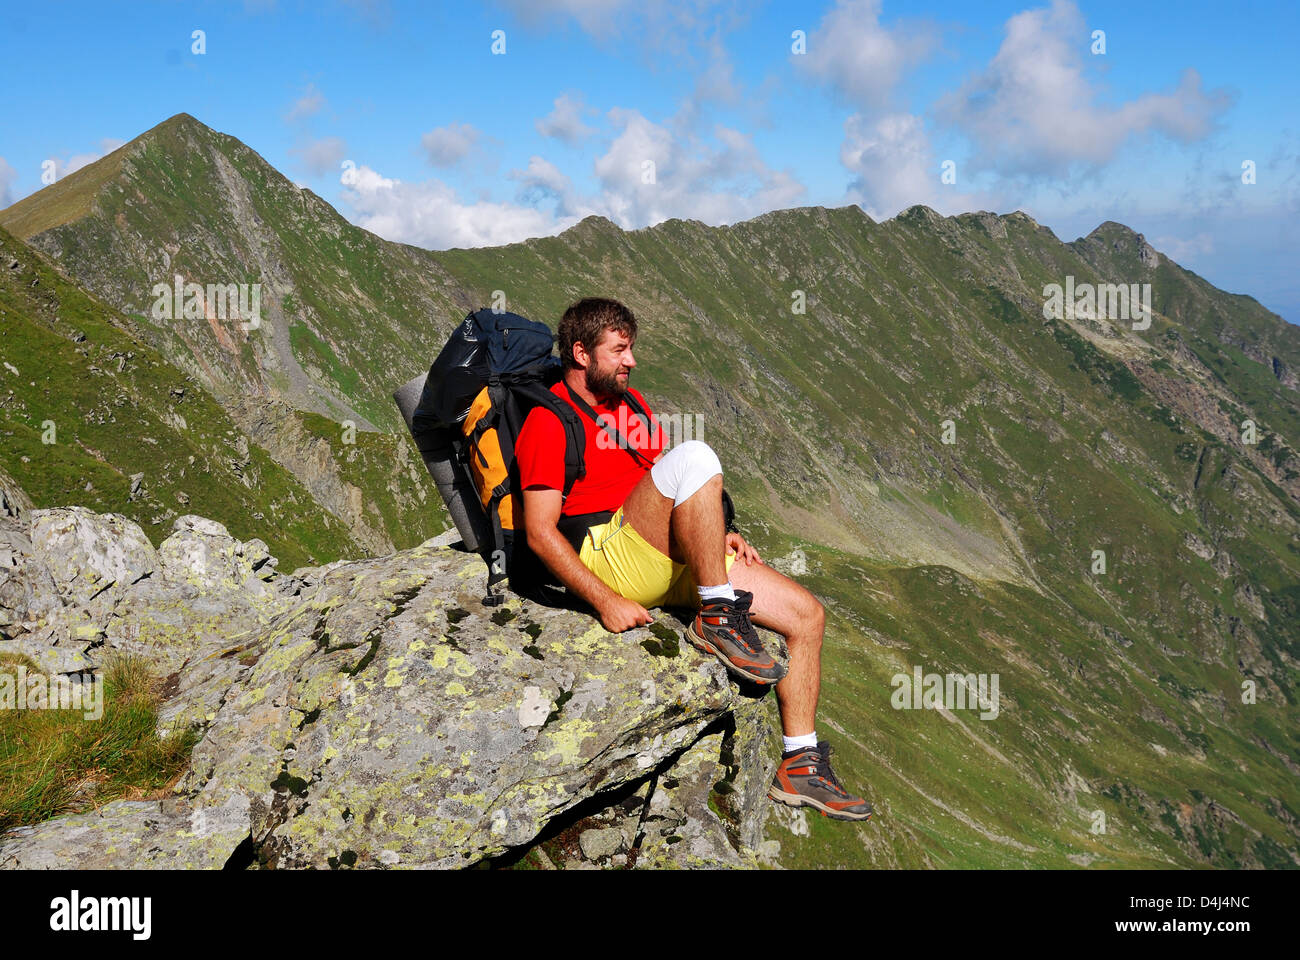 Tourist in Fagaras, Carpathian Mountains range in Romania. Outdoors scenery of hiking. Stock Photo